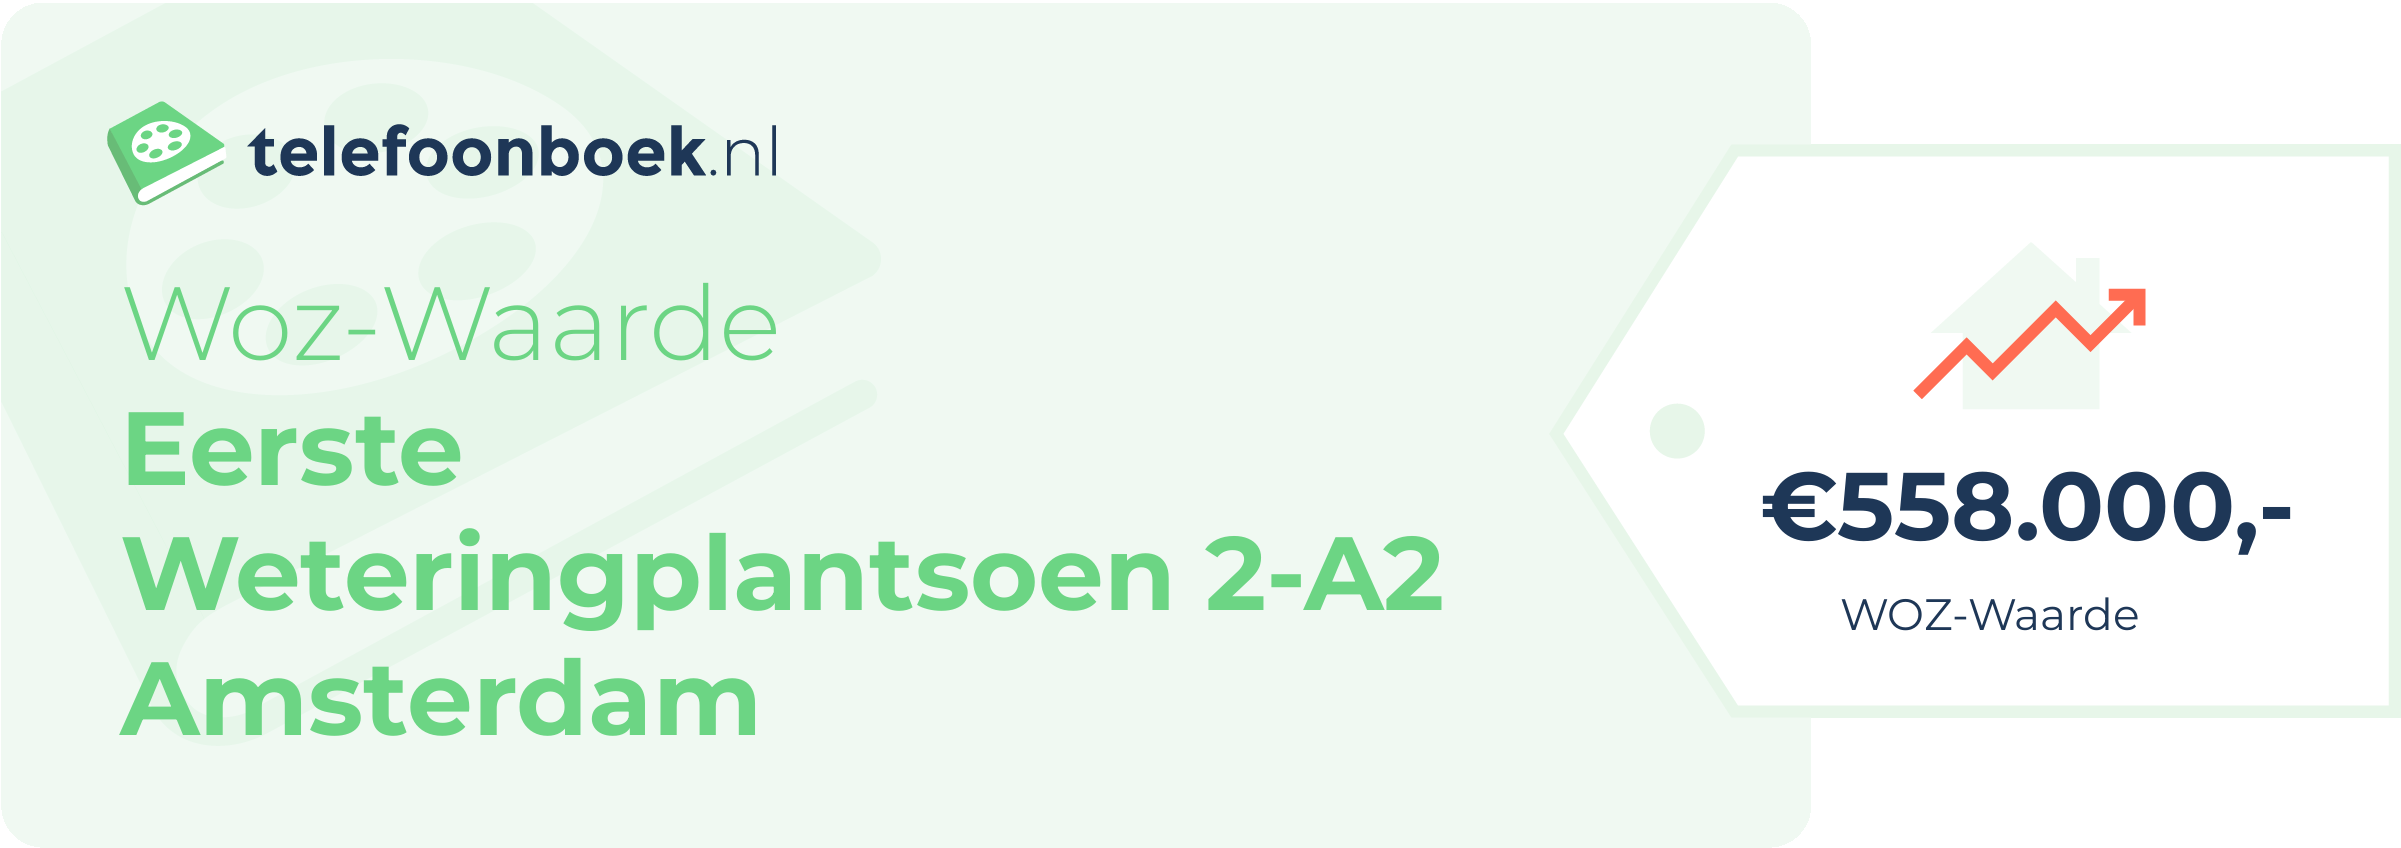 WOZ-waarde Eerste Weteringplantsoen 2-A2 Amsterdam